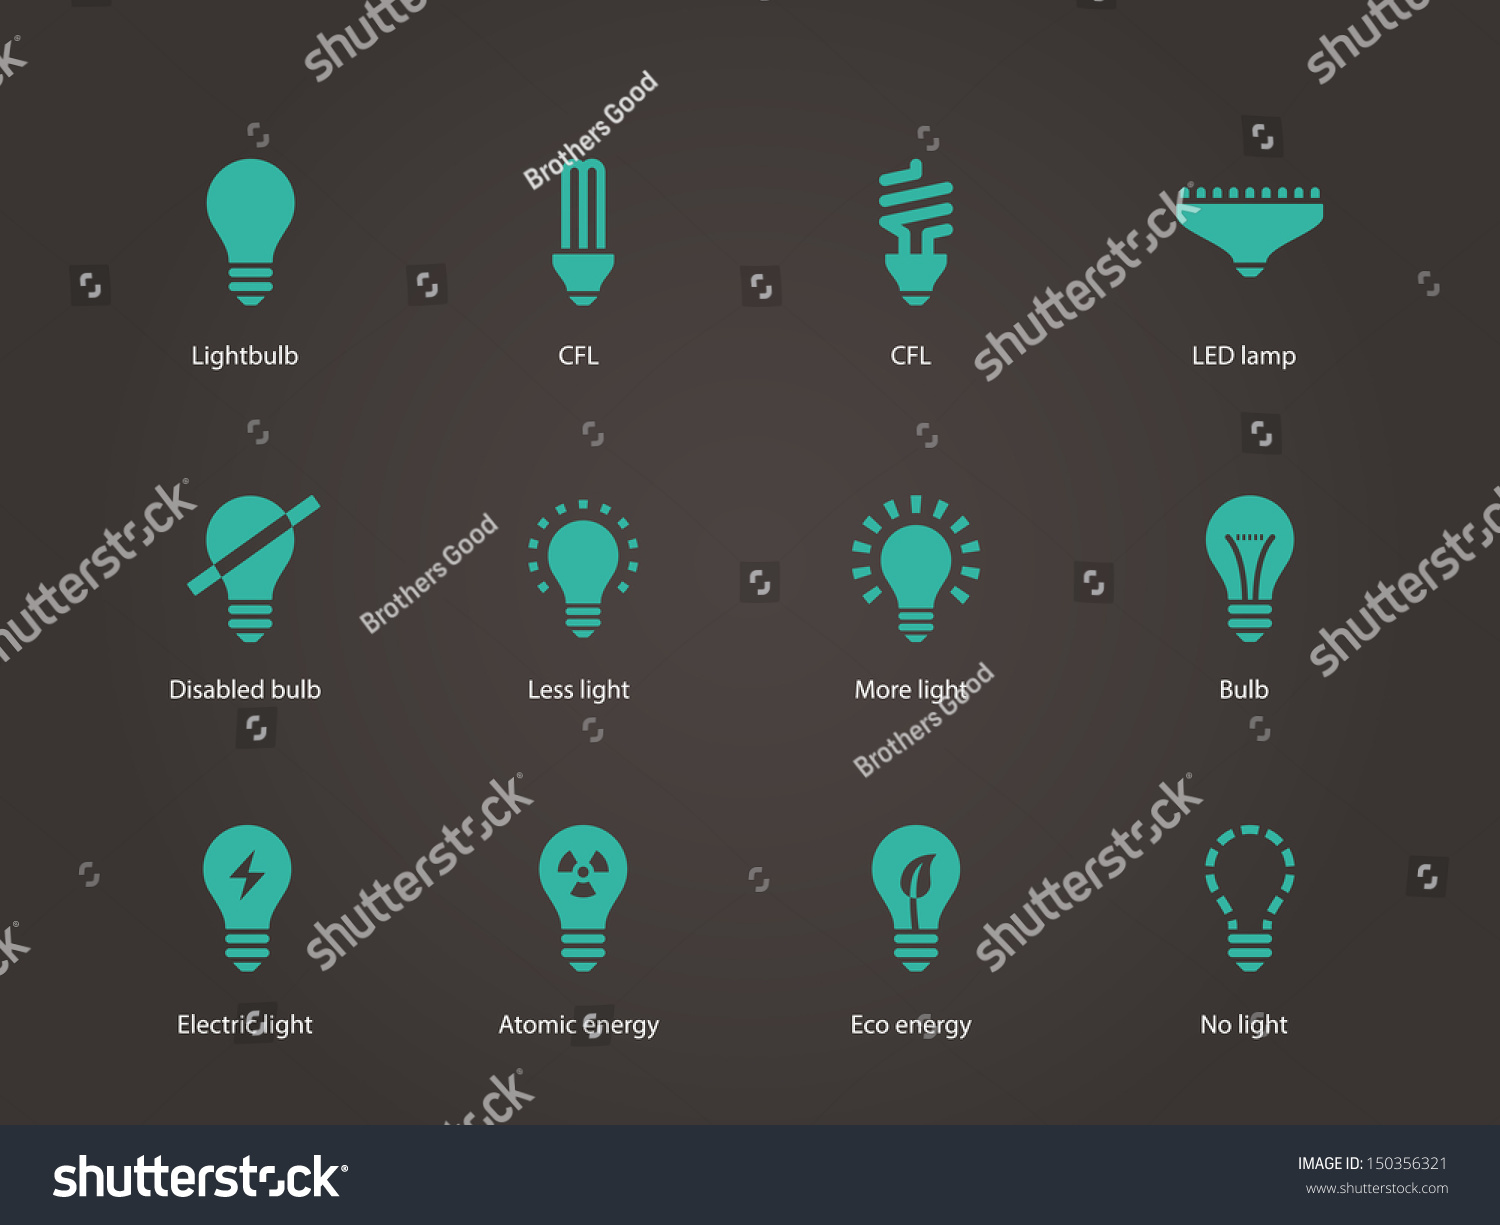 Light bulb and LED lamp. Vector illustration. #150356321